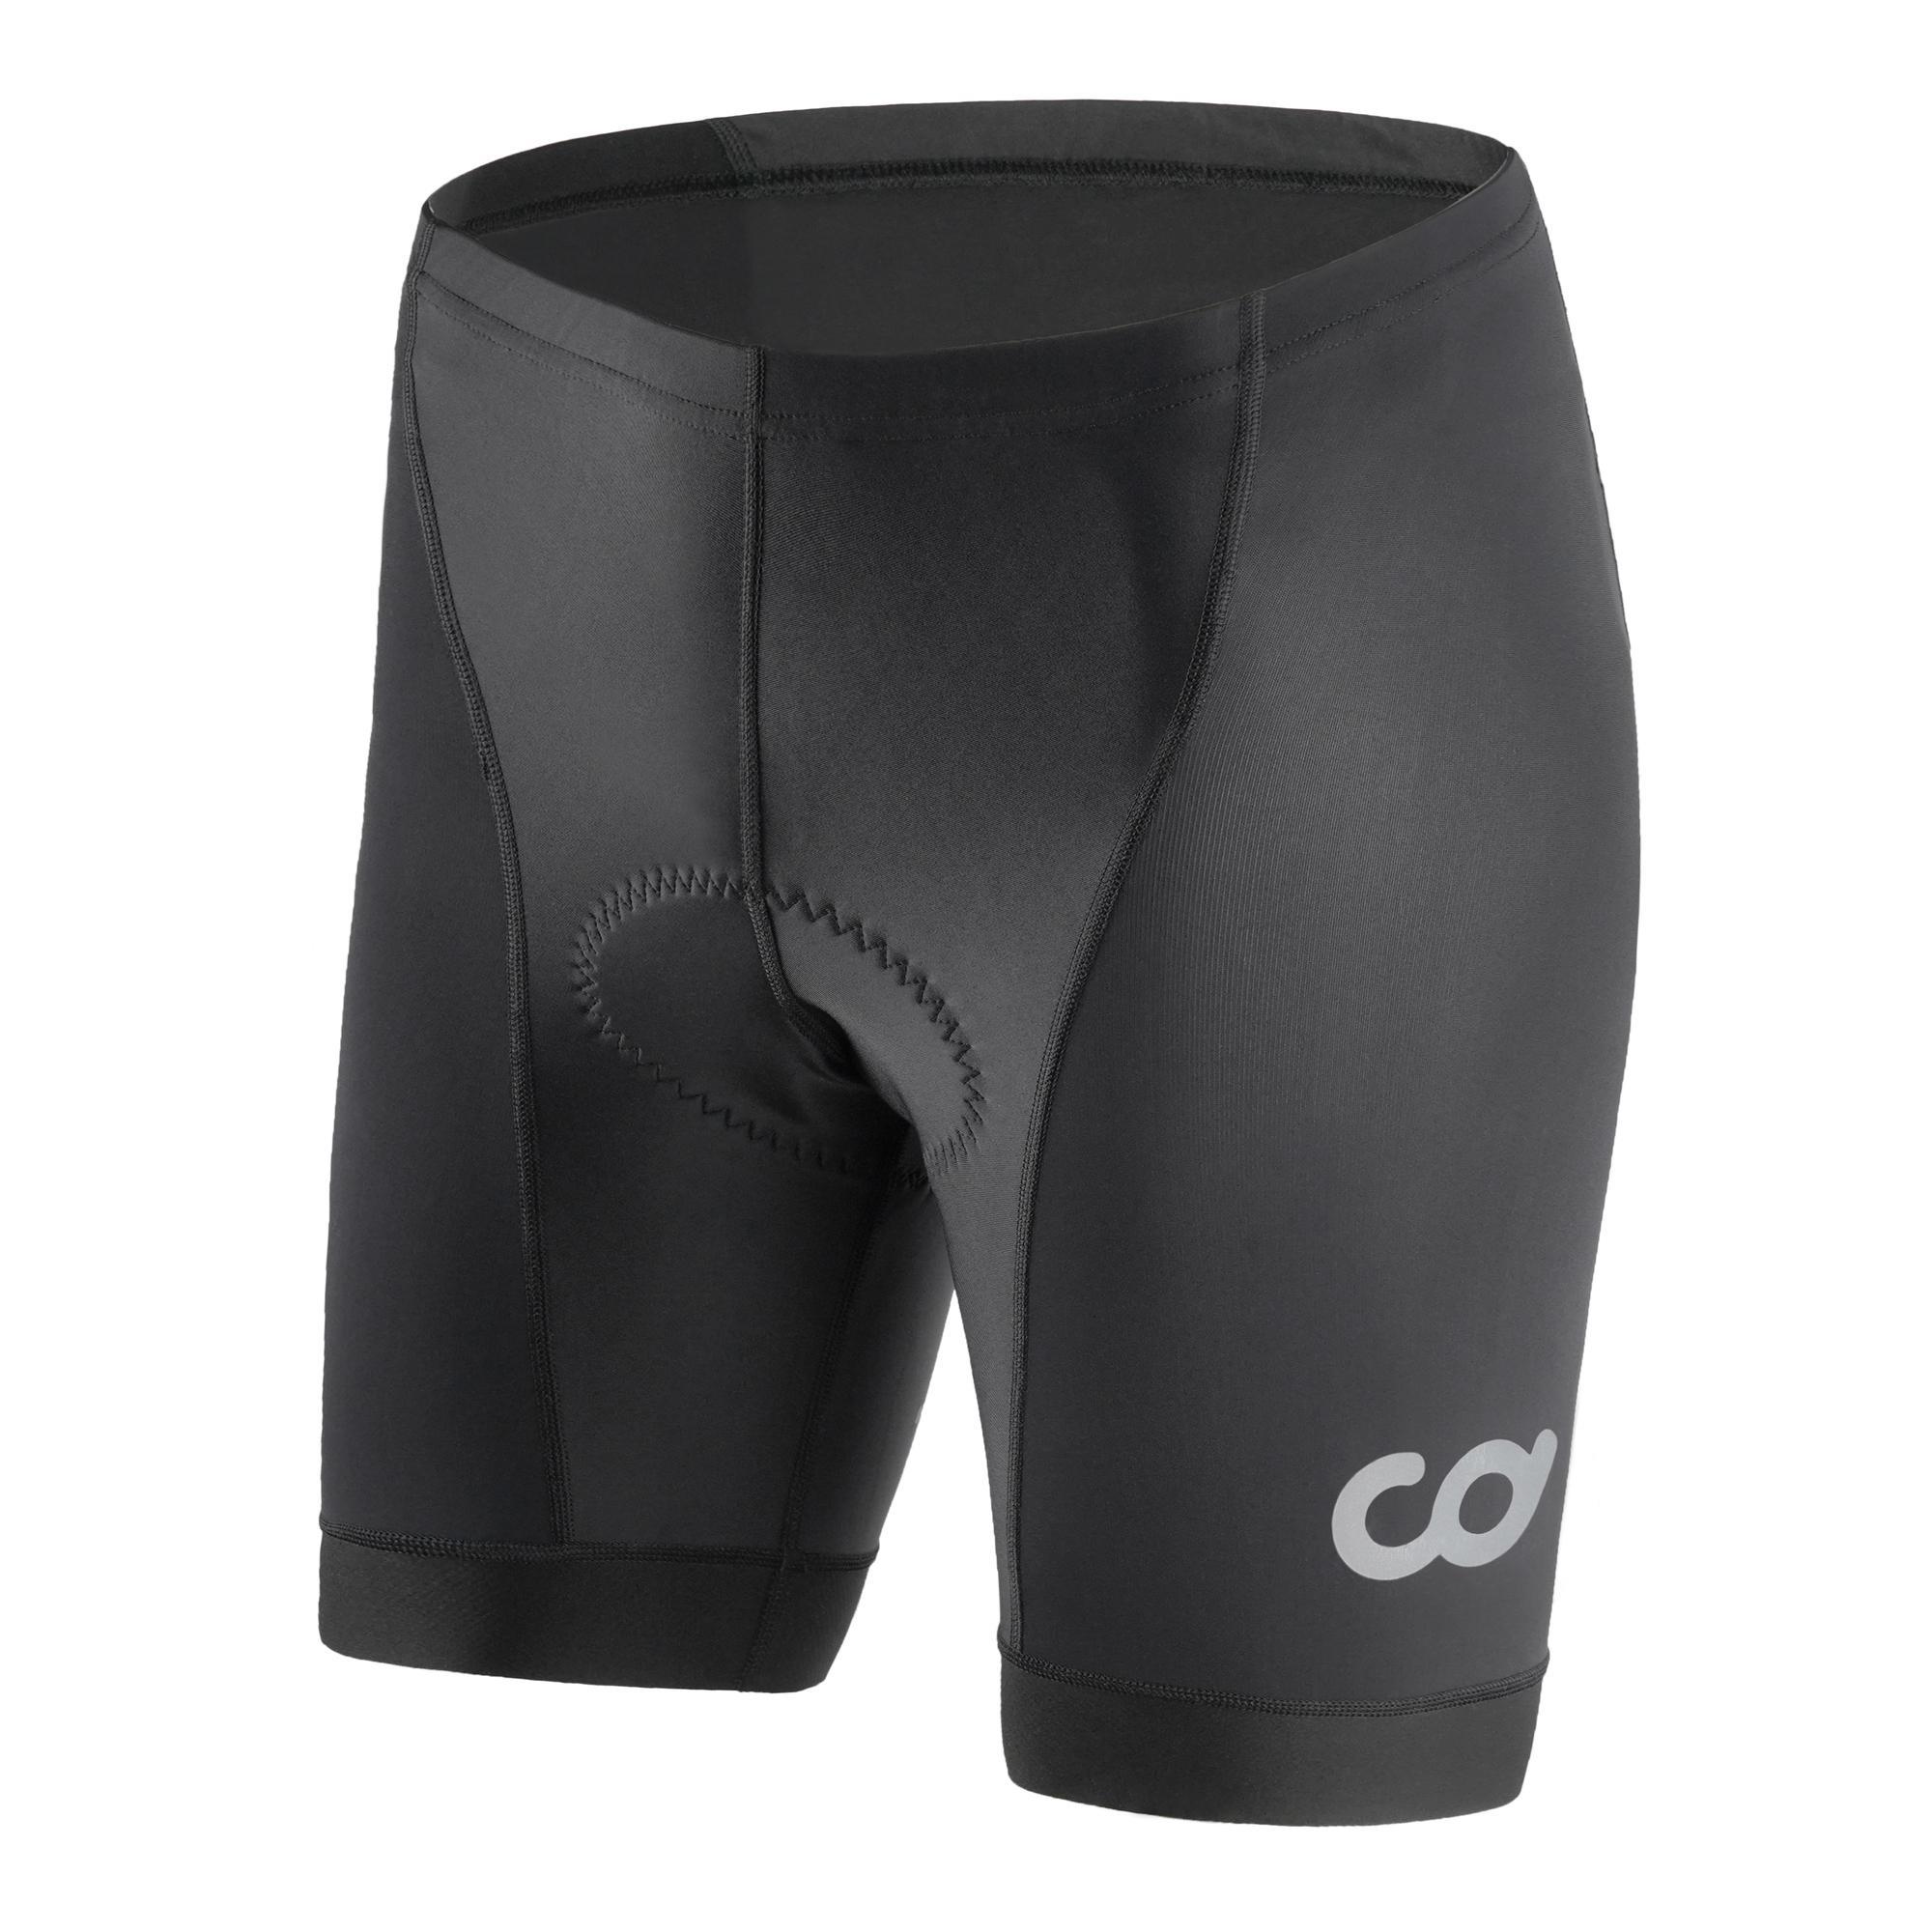 CD Men's Premium Quality Cycling Padded Shorts Pants with 3D Padding - High Waist Anti-slip Road MTB Bicycle Biking Riding Tights Underwear - Size M